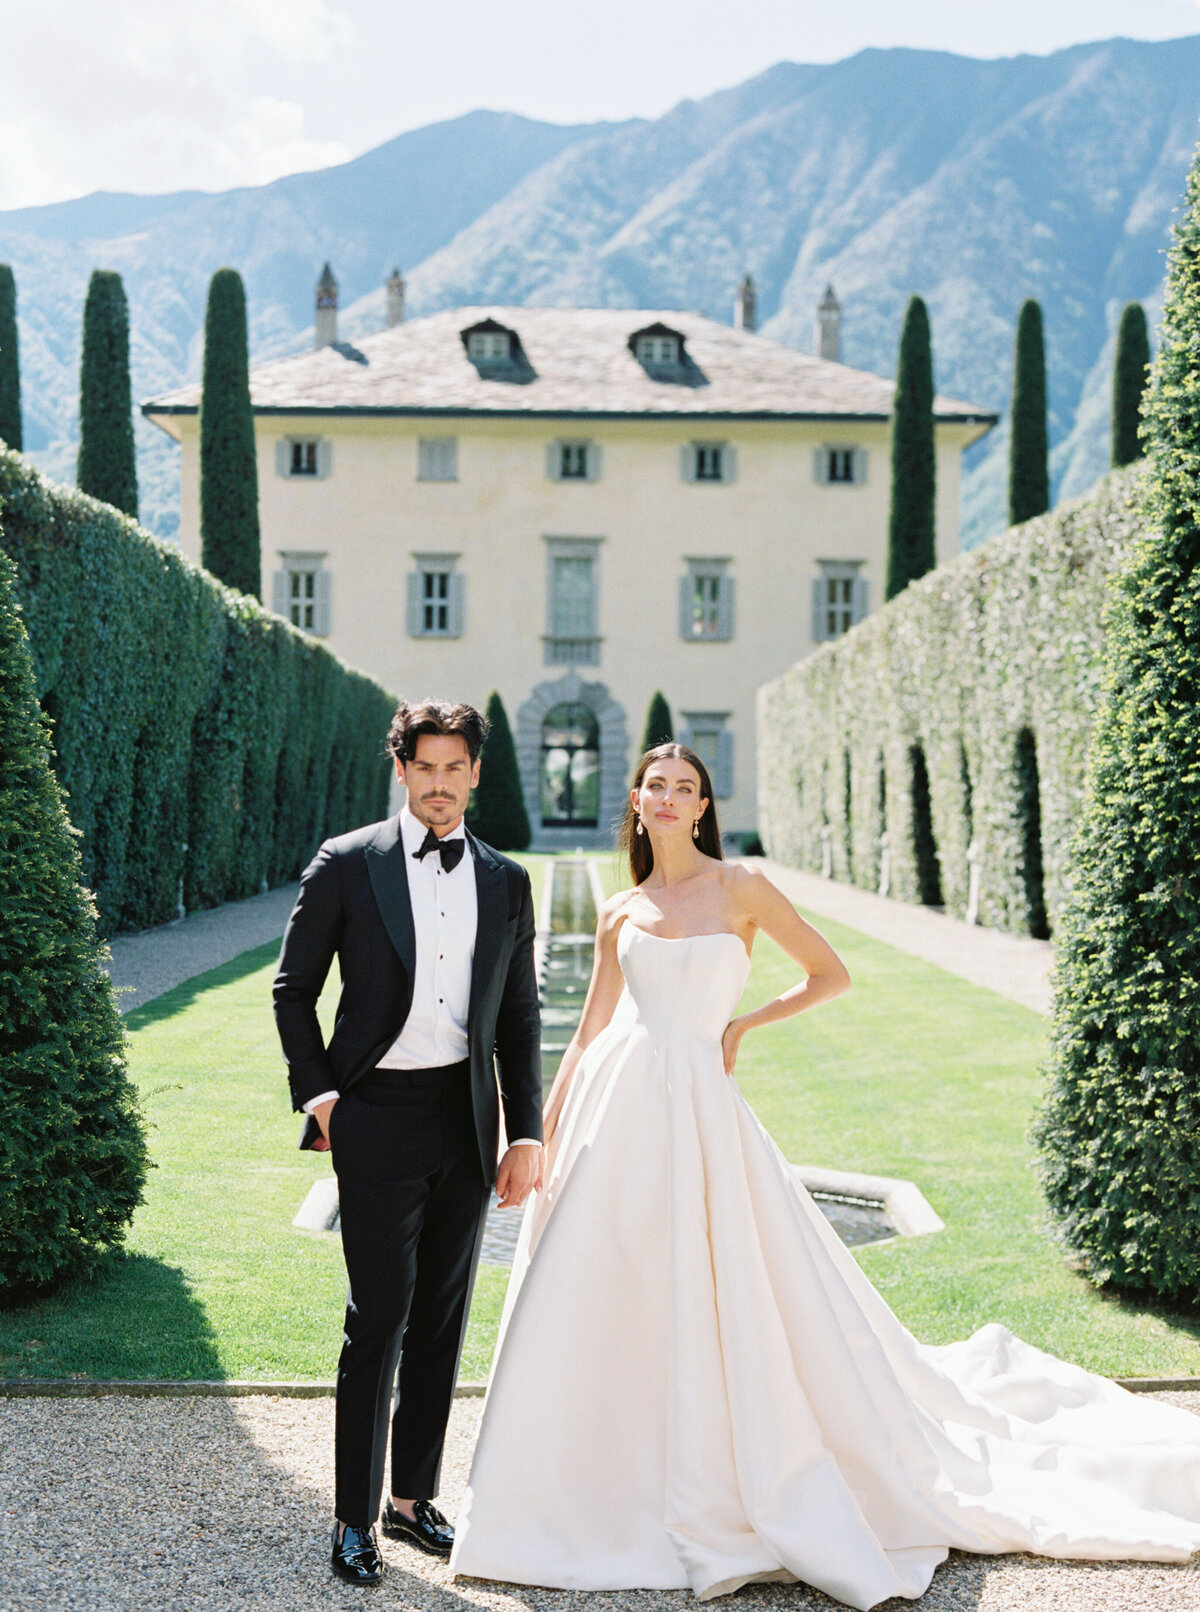 Villa Balbiano Wedding - Bride and groom making their grand entrance at Villa Balbiano